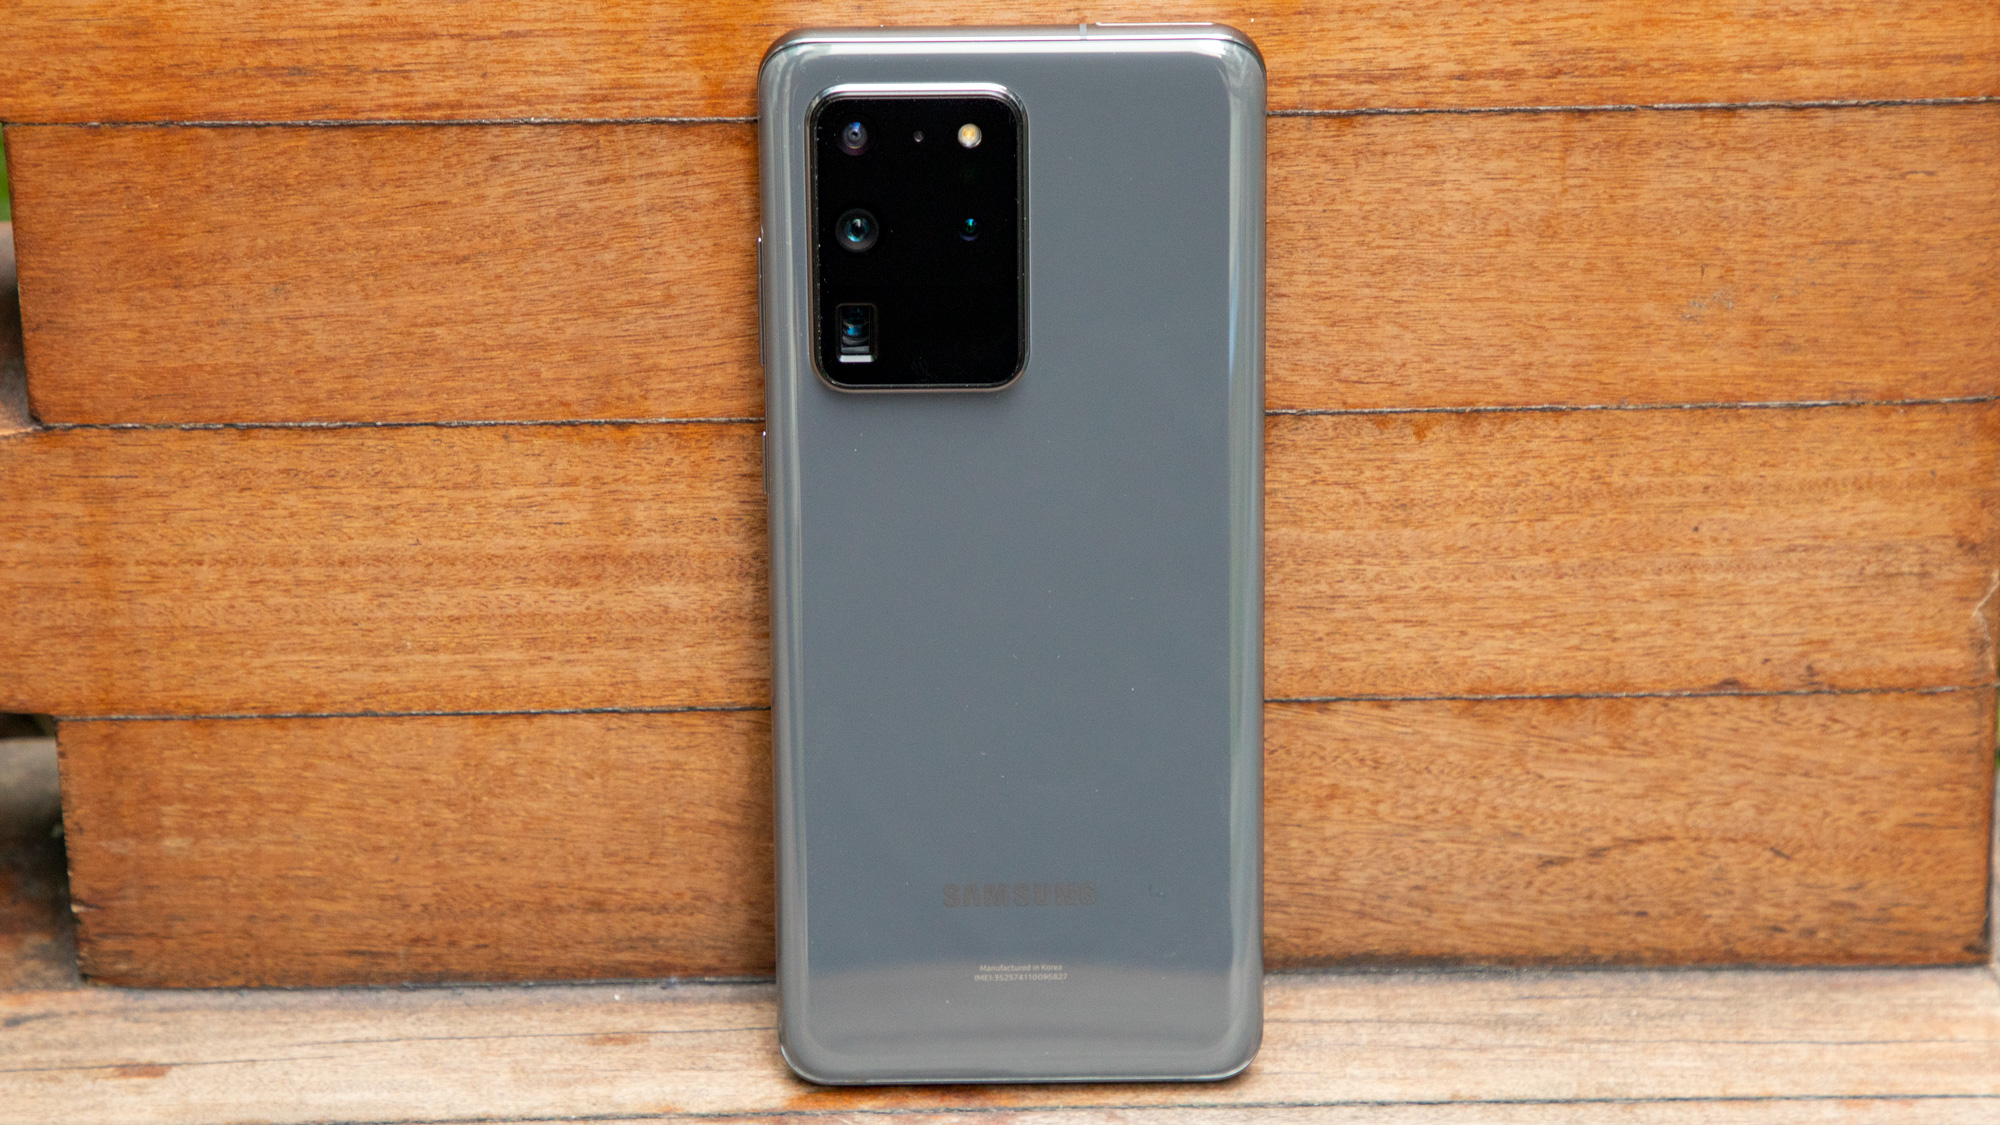 Samsung Galaxy S20 Ultra back view